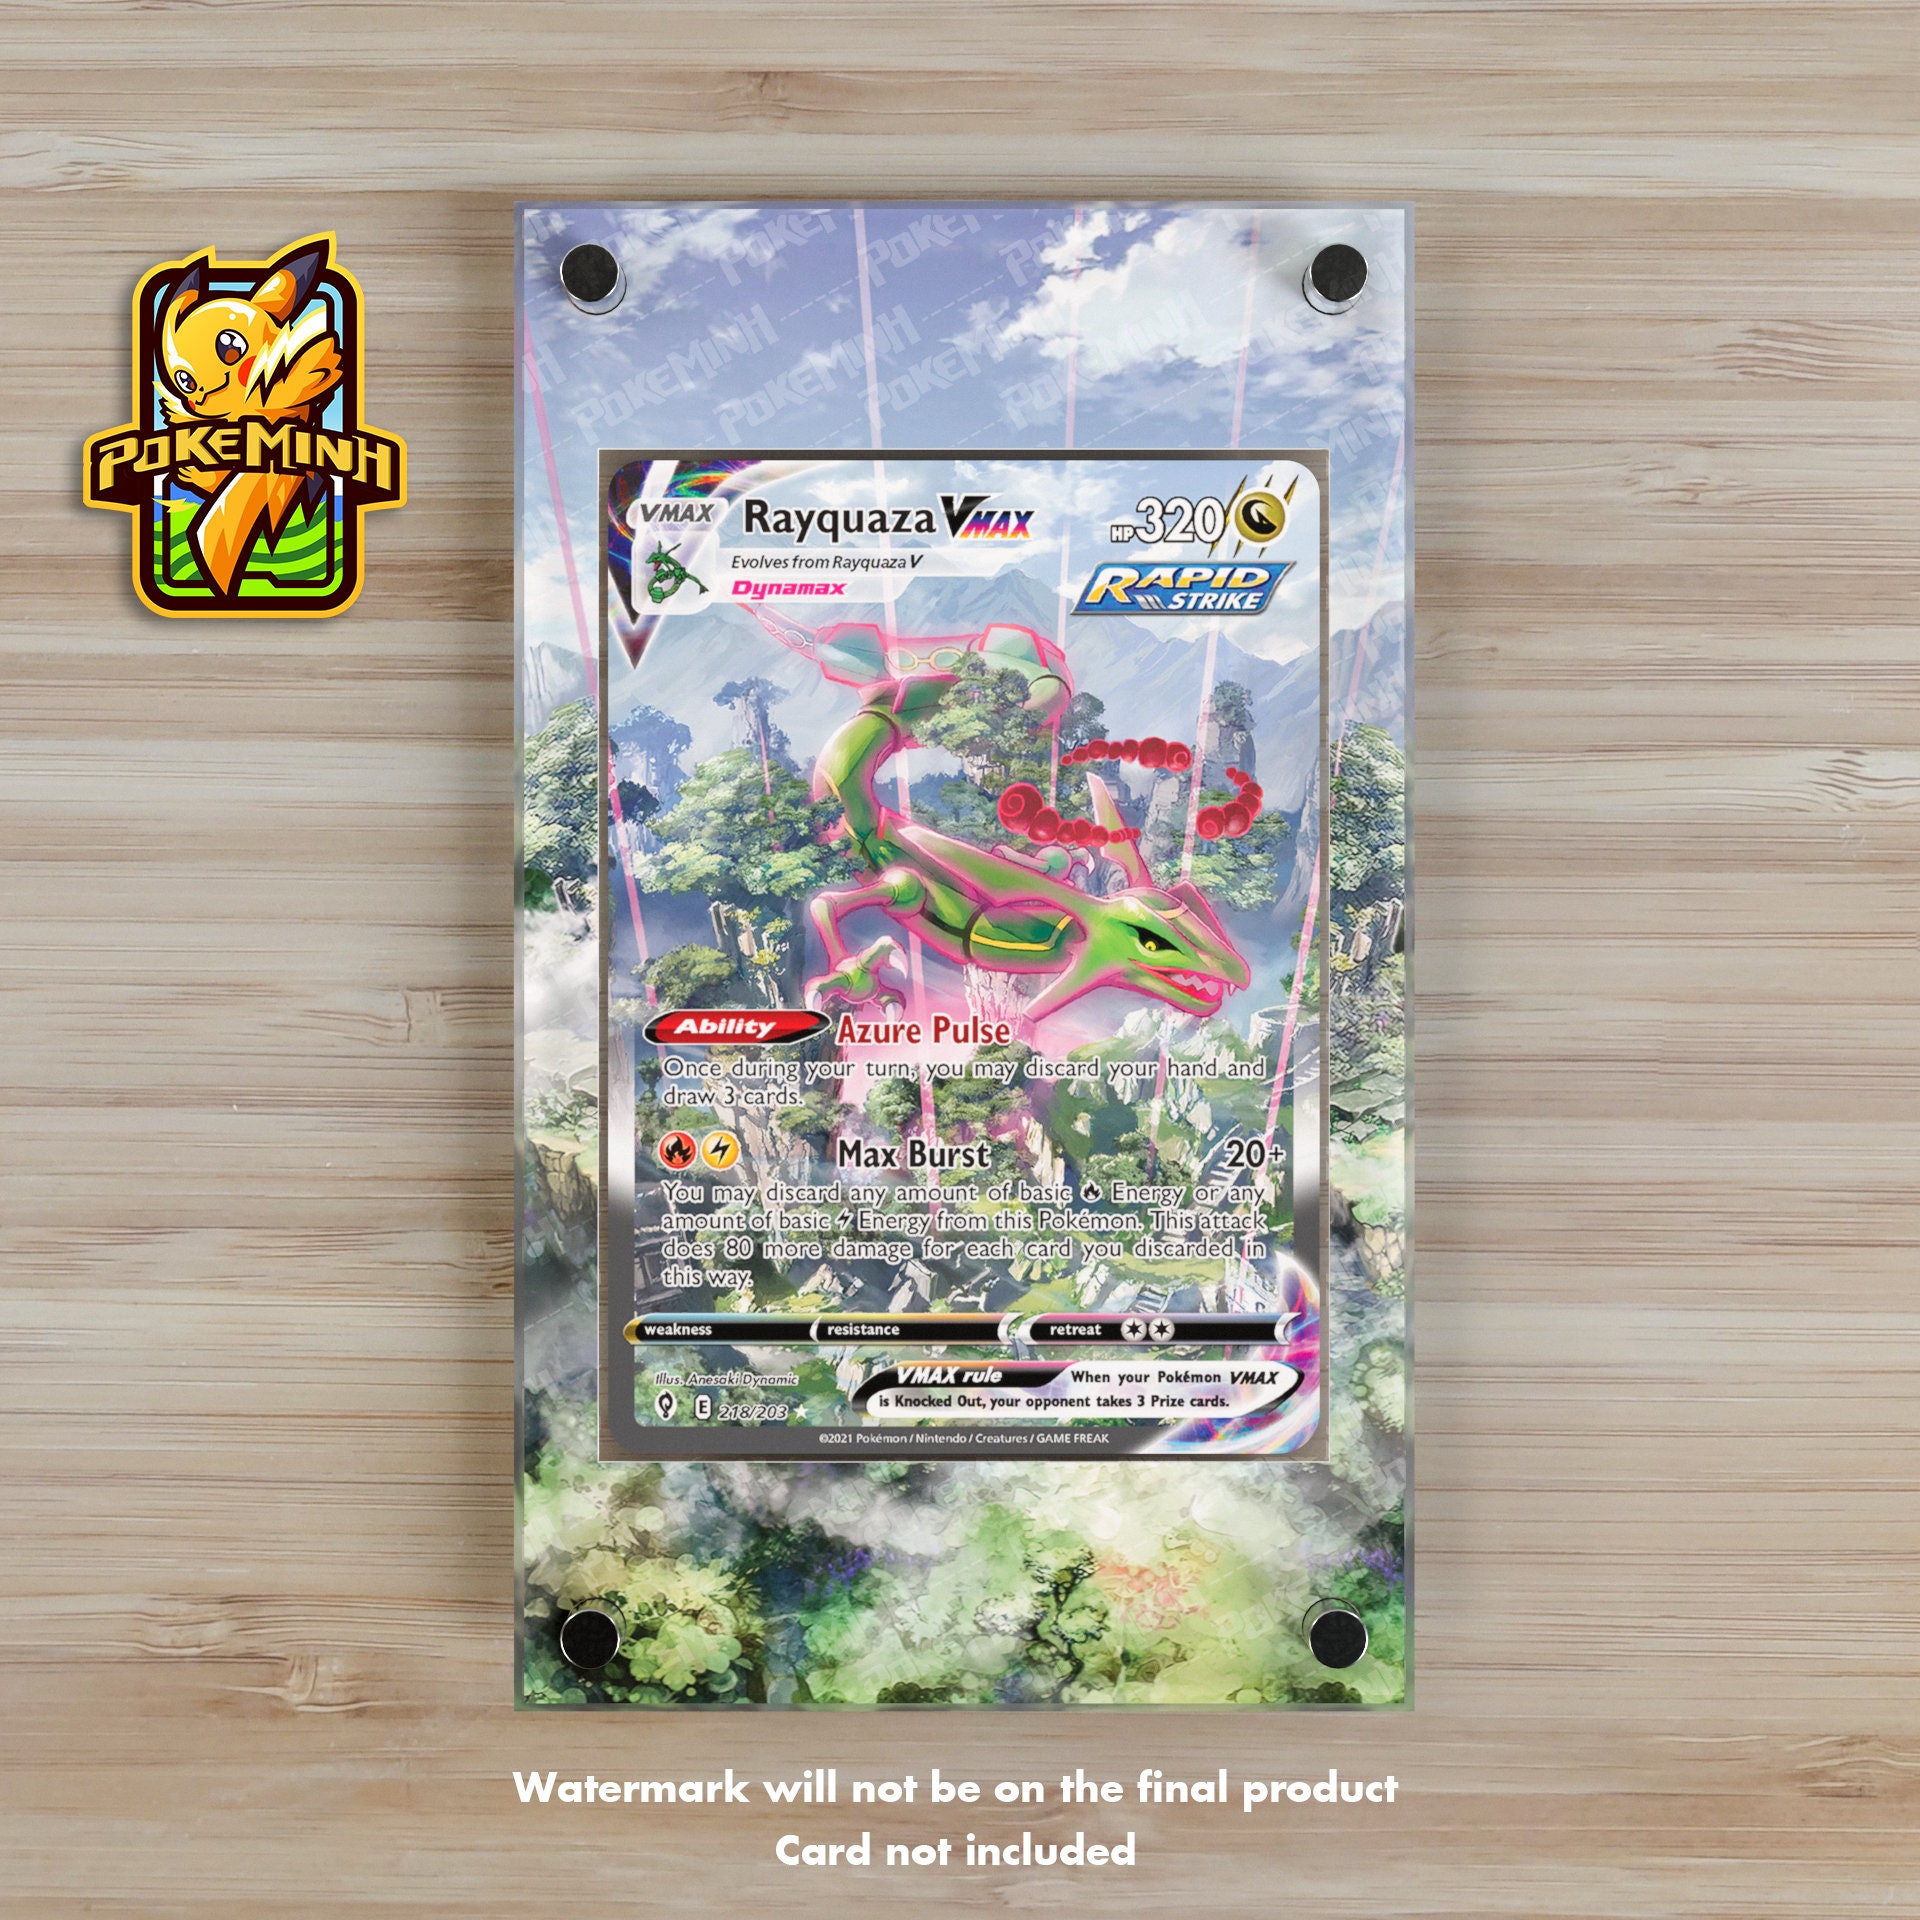 Solar Rayquaza GX - Fan-Made Custom Trading Card Pokemon